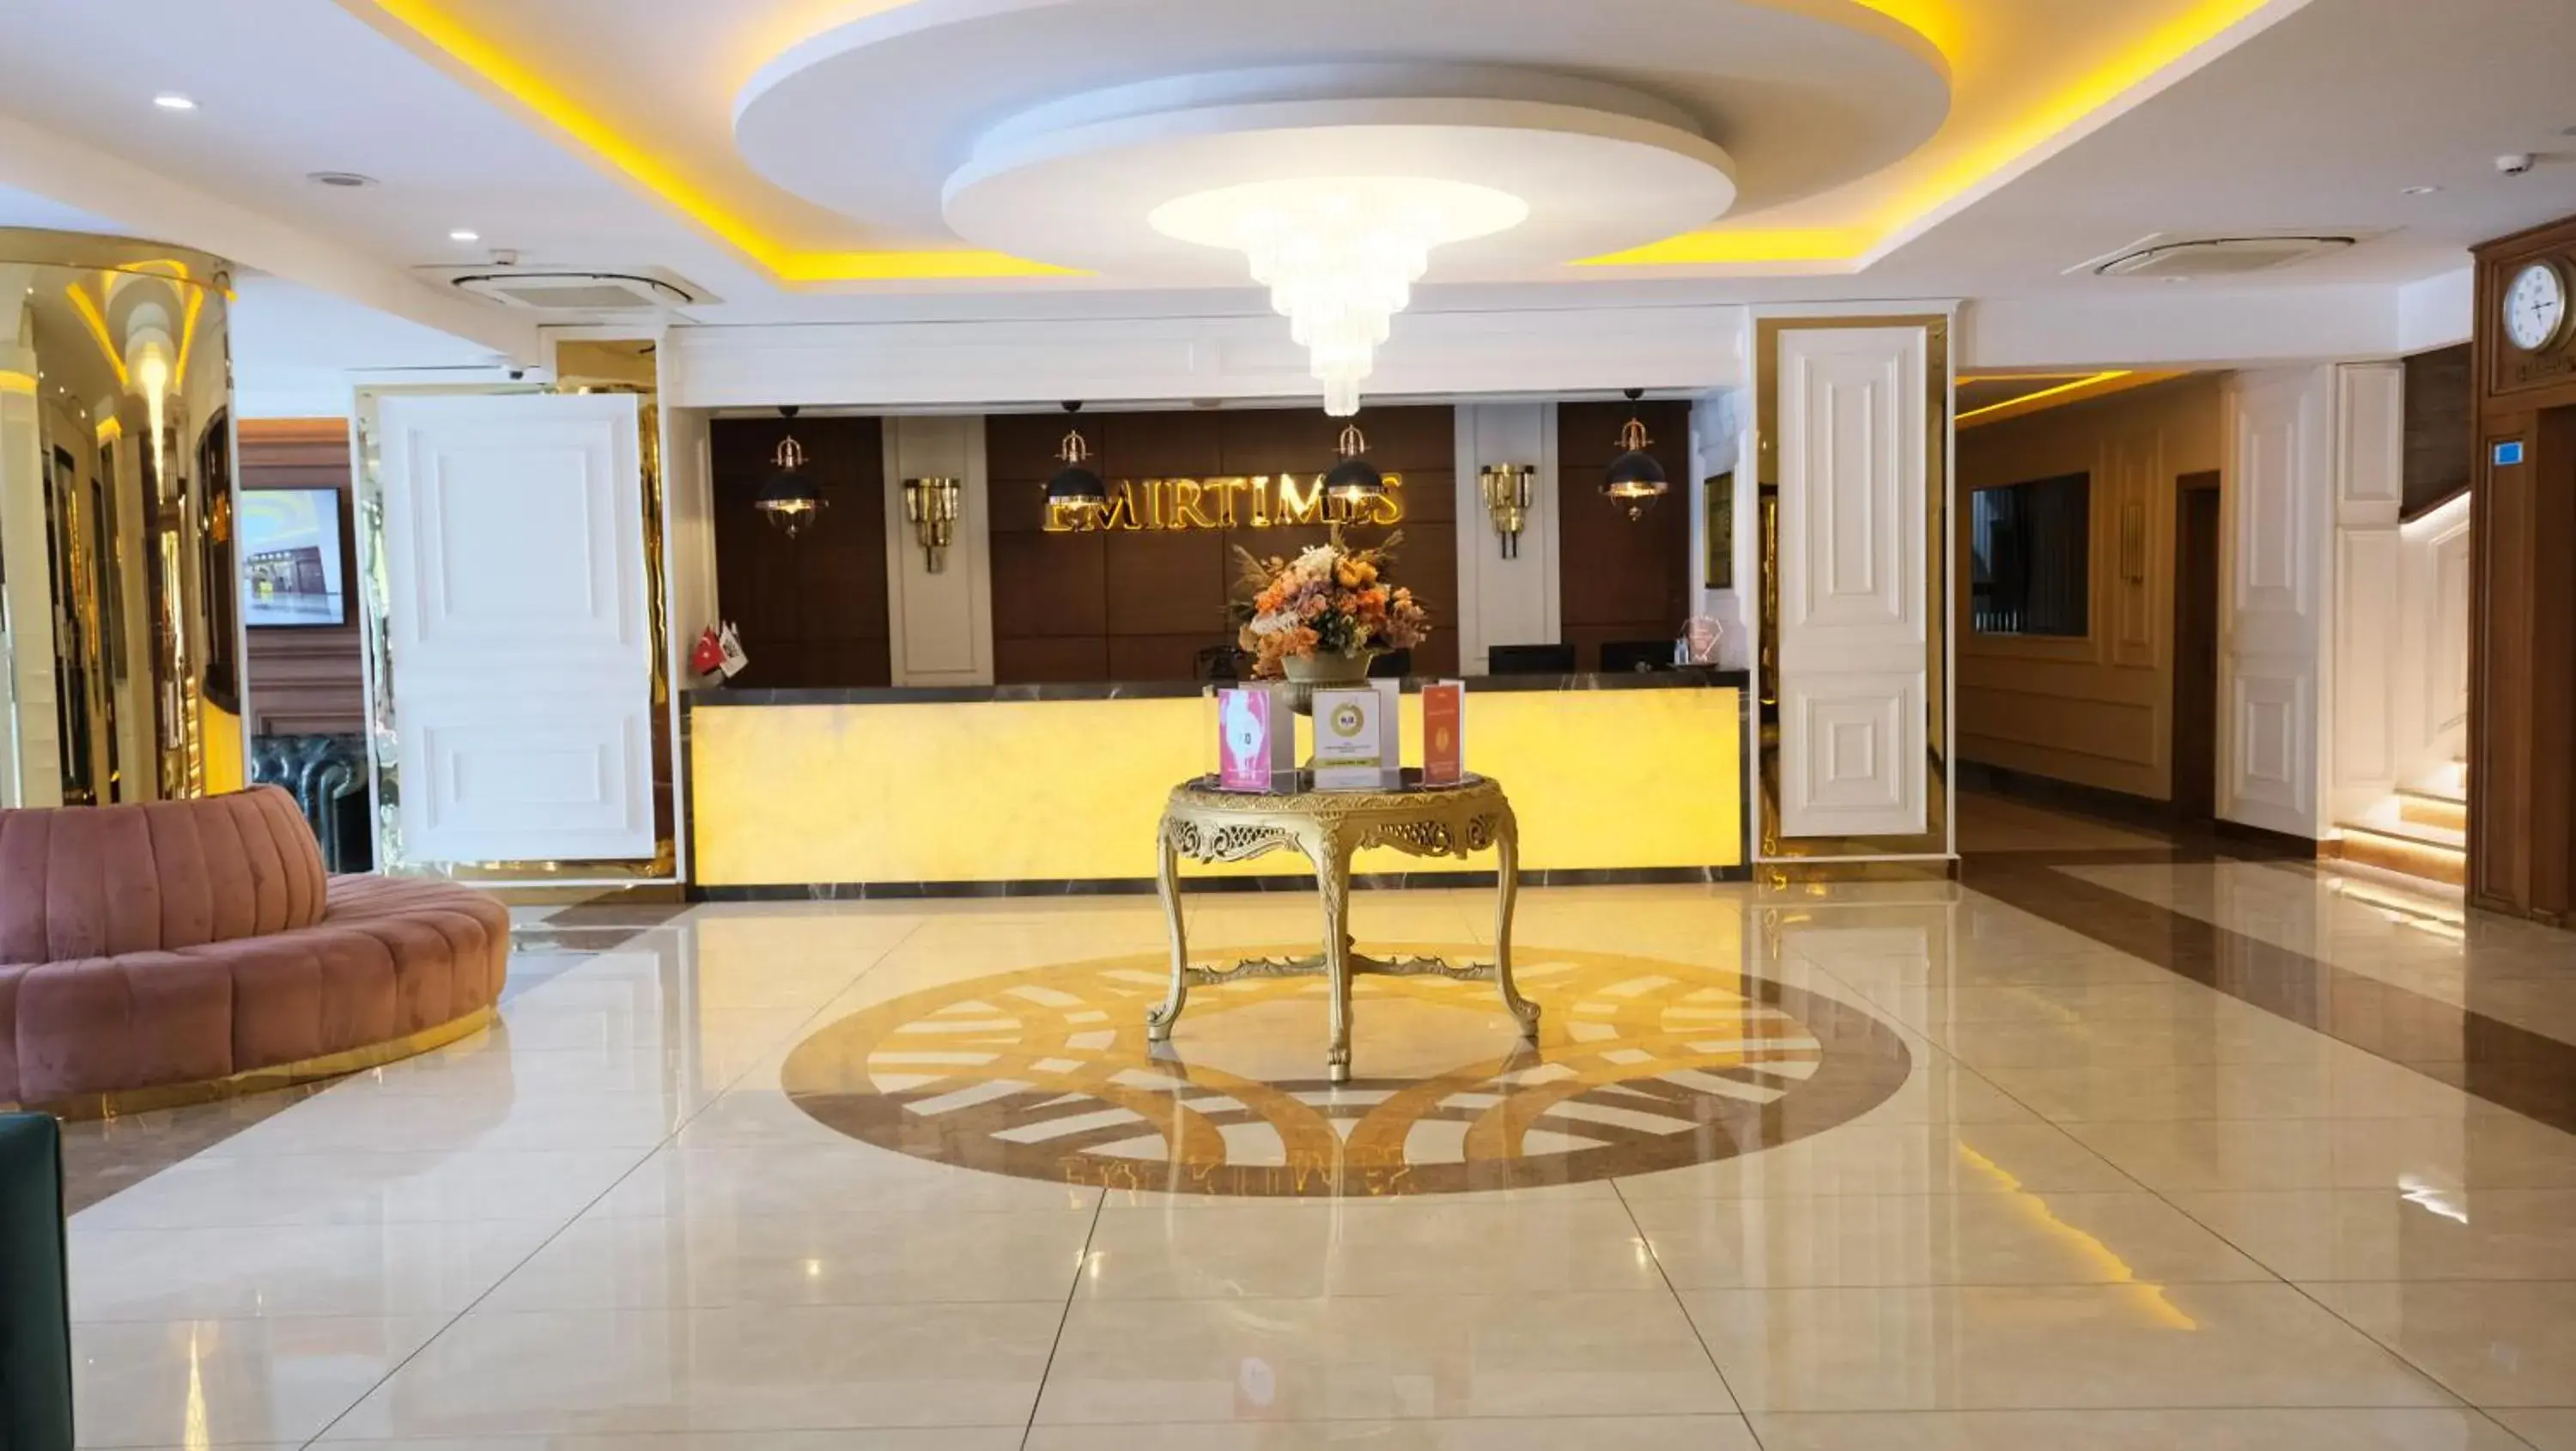 Lobby or reception, Lobby/Reception in Emirtimes Hotel&Spa - Tuzla